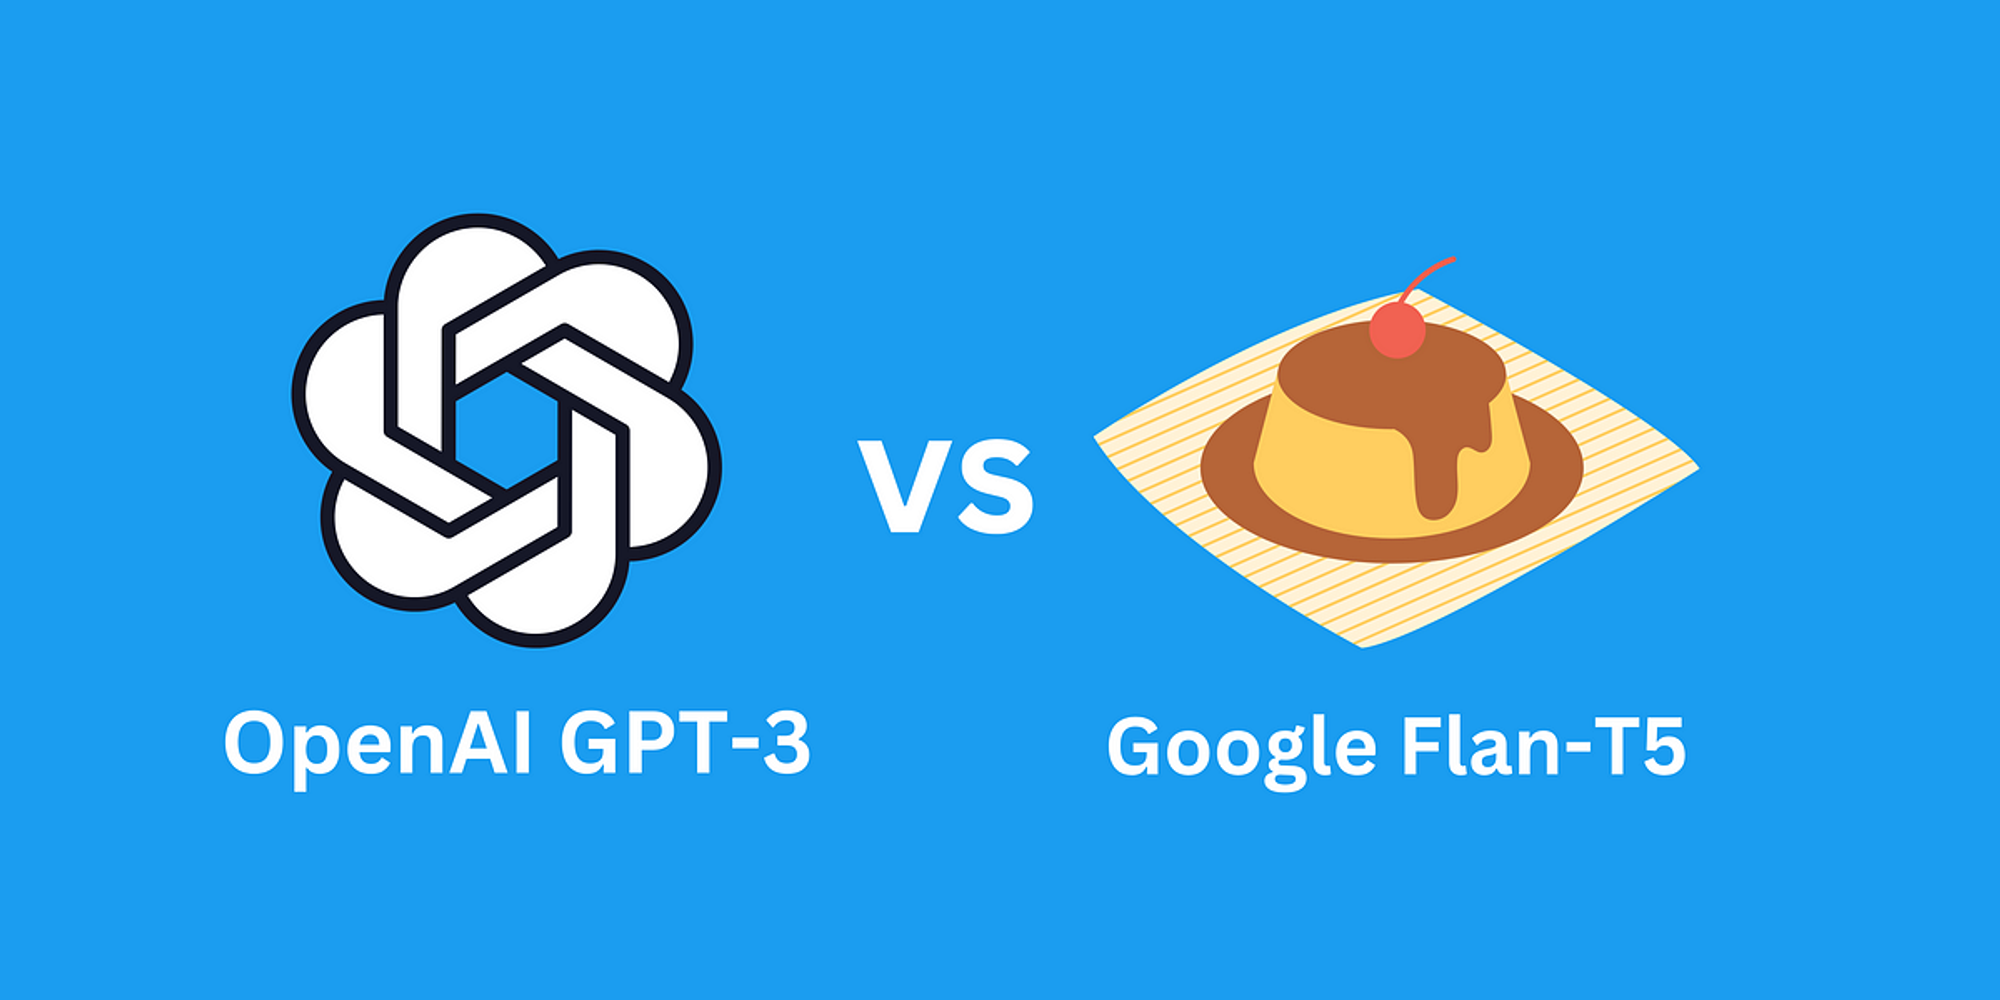 Is Google's Flan-T5 Better Than OpenAI GPT-3?